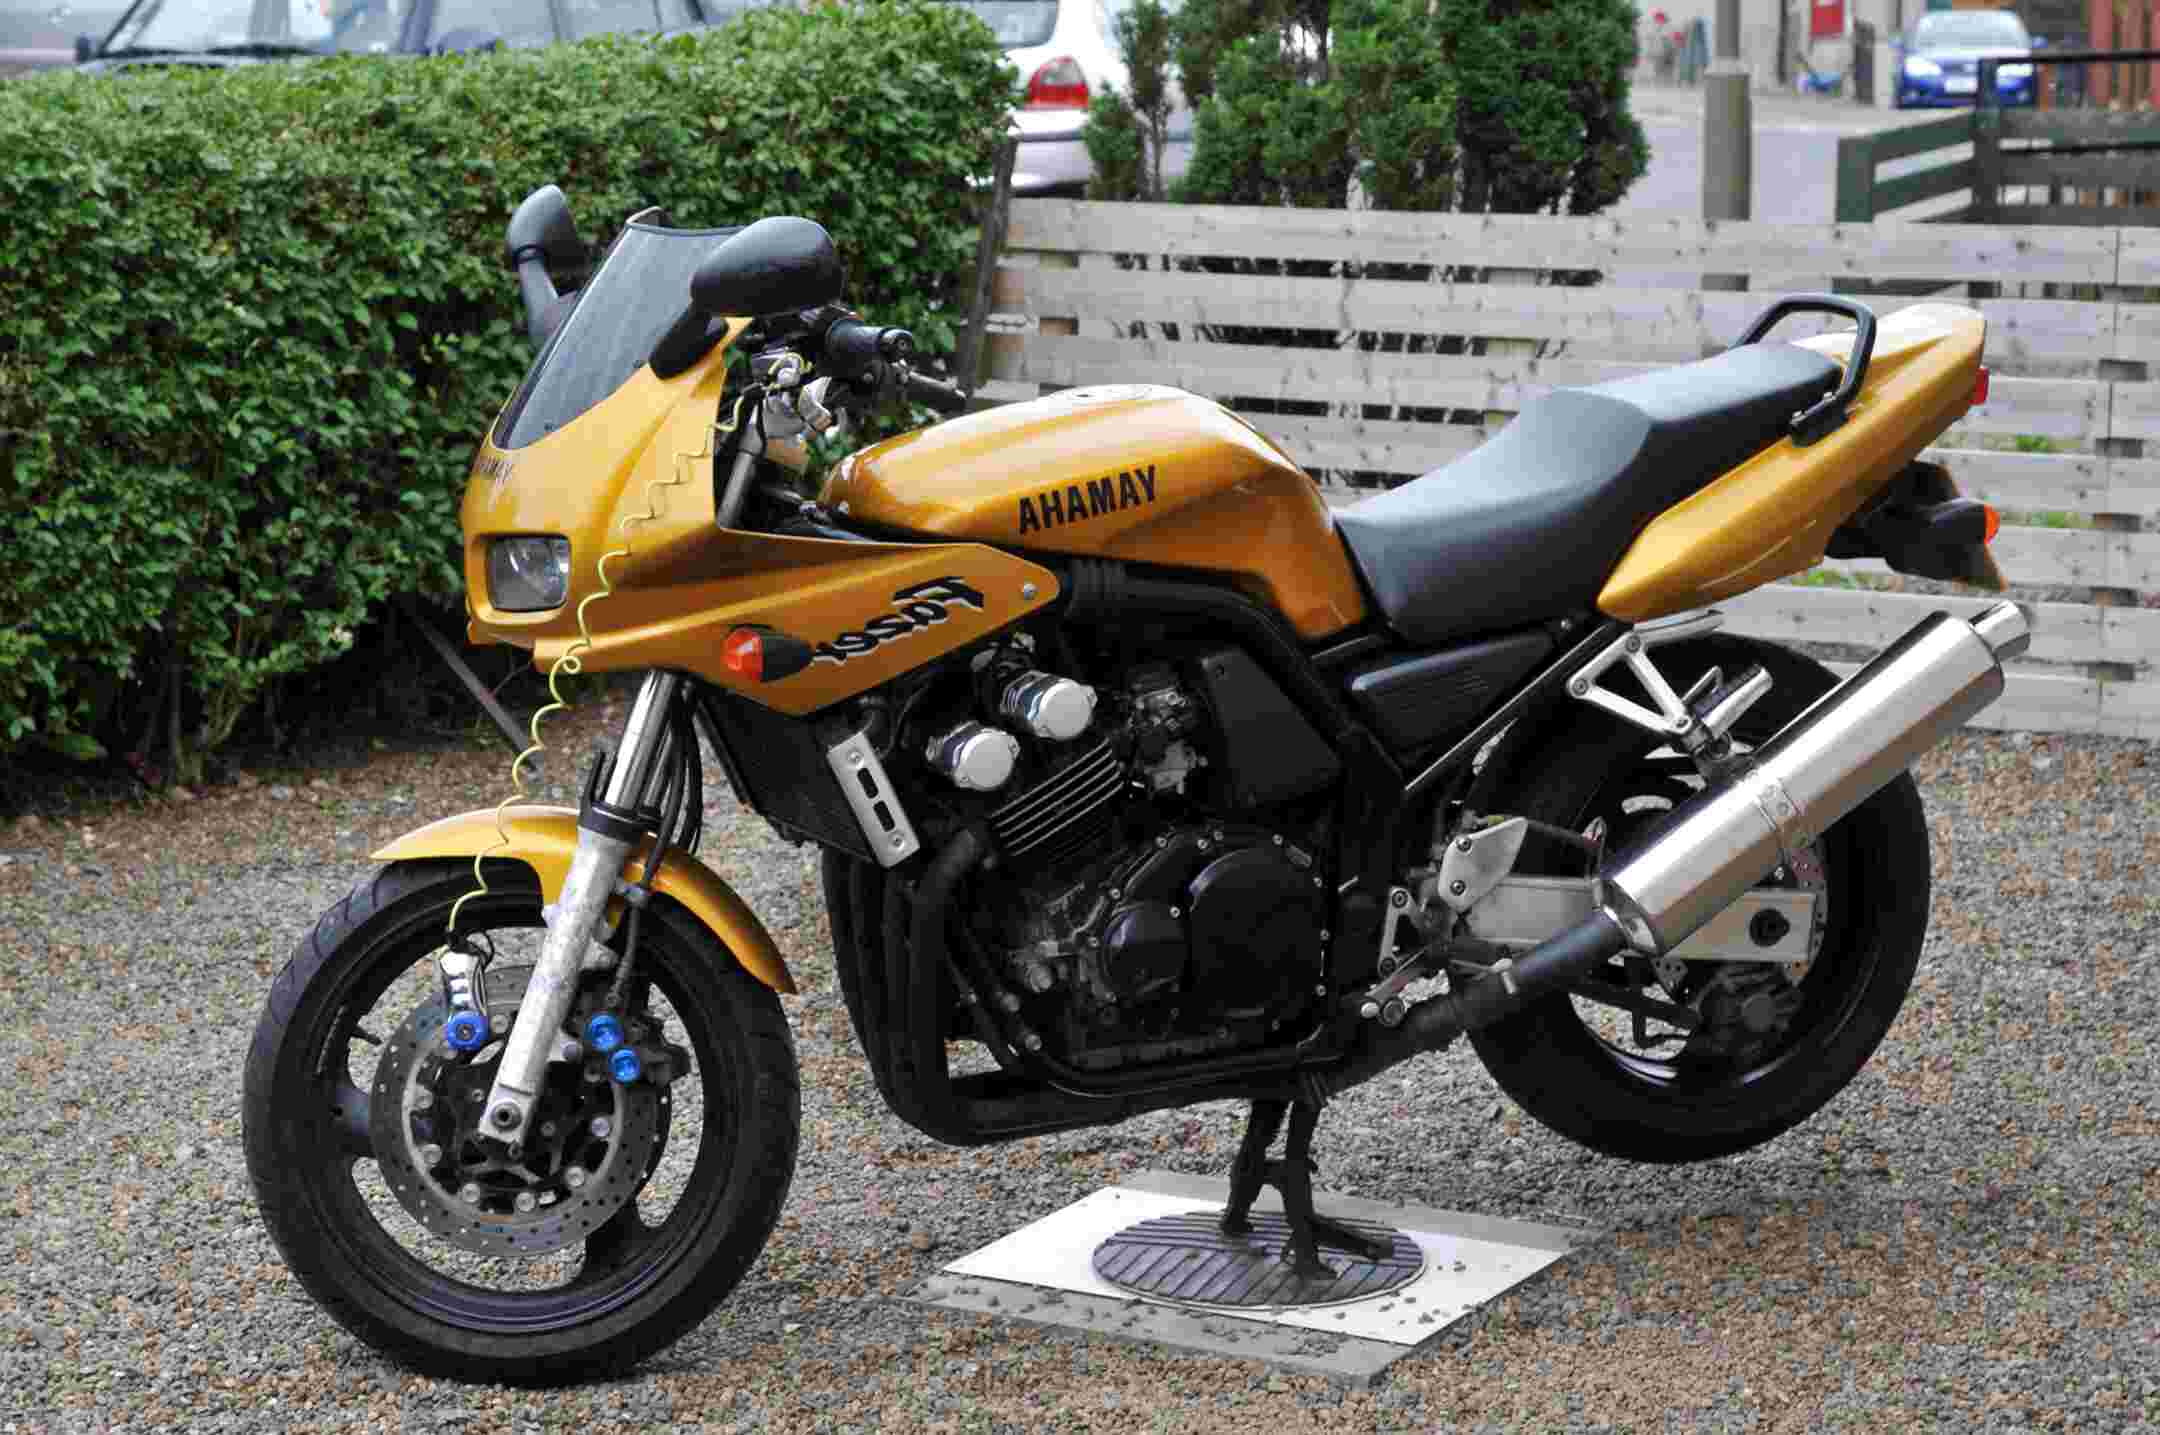 Yamaha Fzs600 for sale in UK | 71 used Yamaha Fzs600